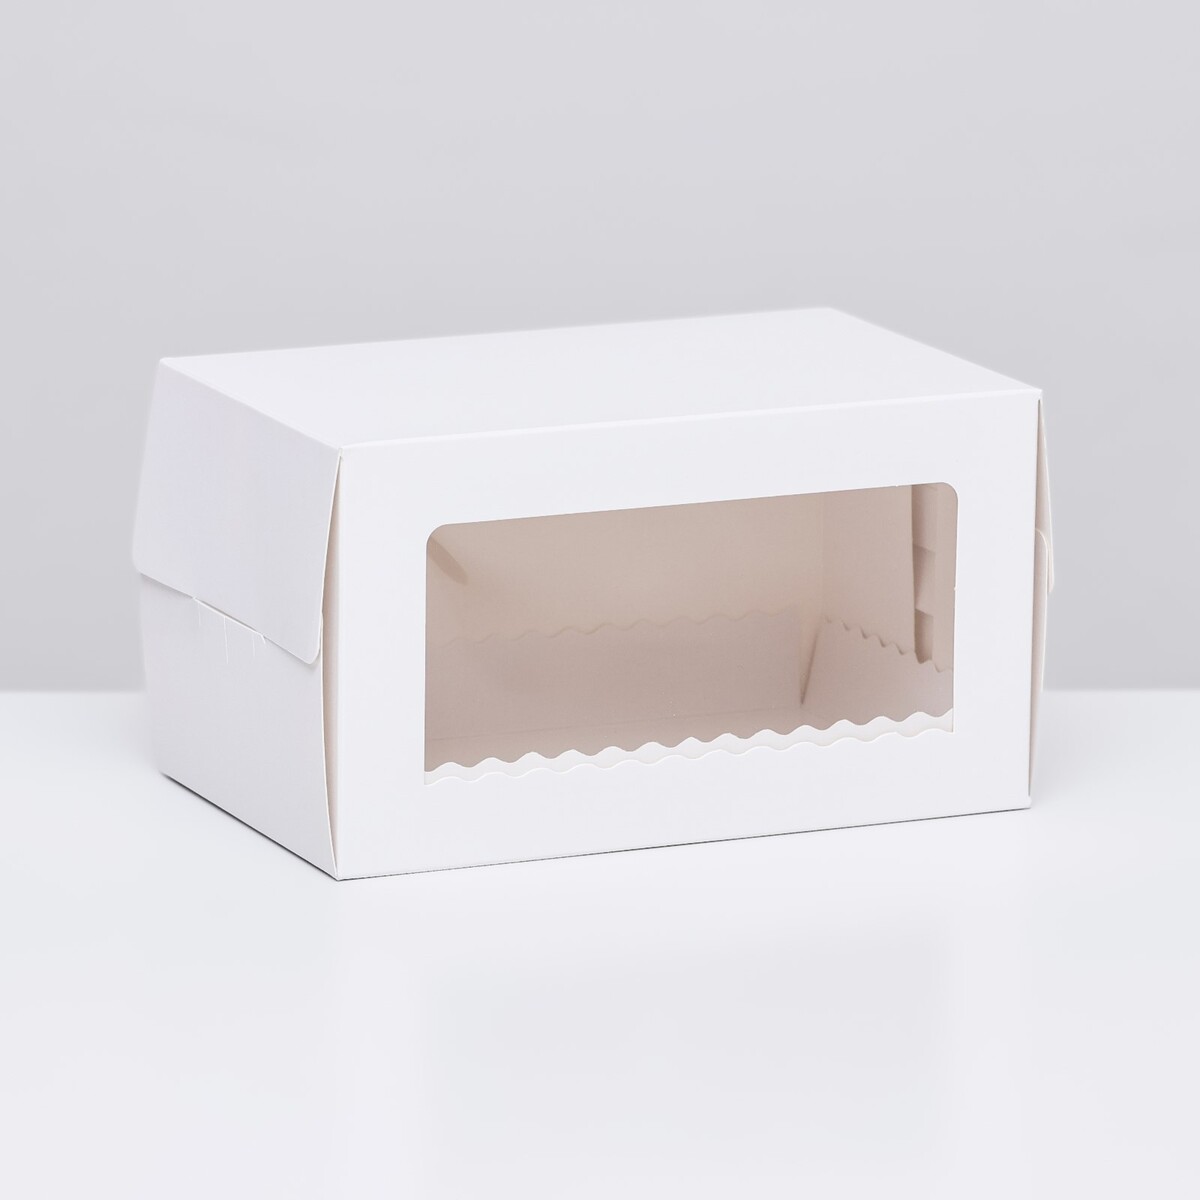 Коробка под рулет с окном, белая 16,5 х 11 х 10 см коробка складная с окном под рулет голубая 26 х 10 х 8 см